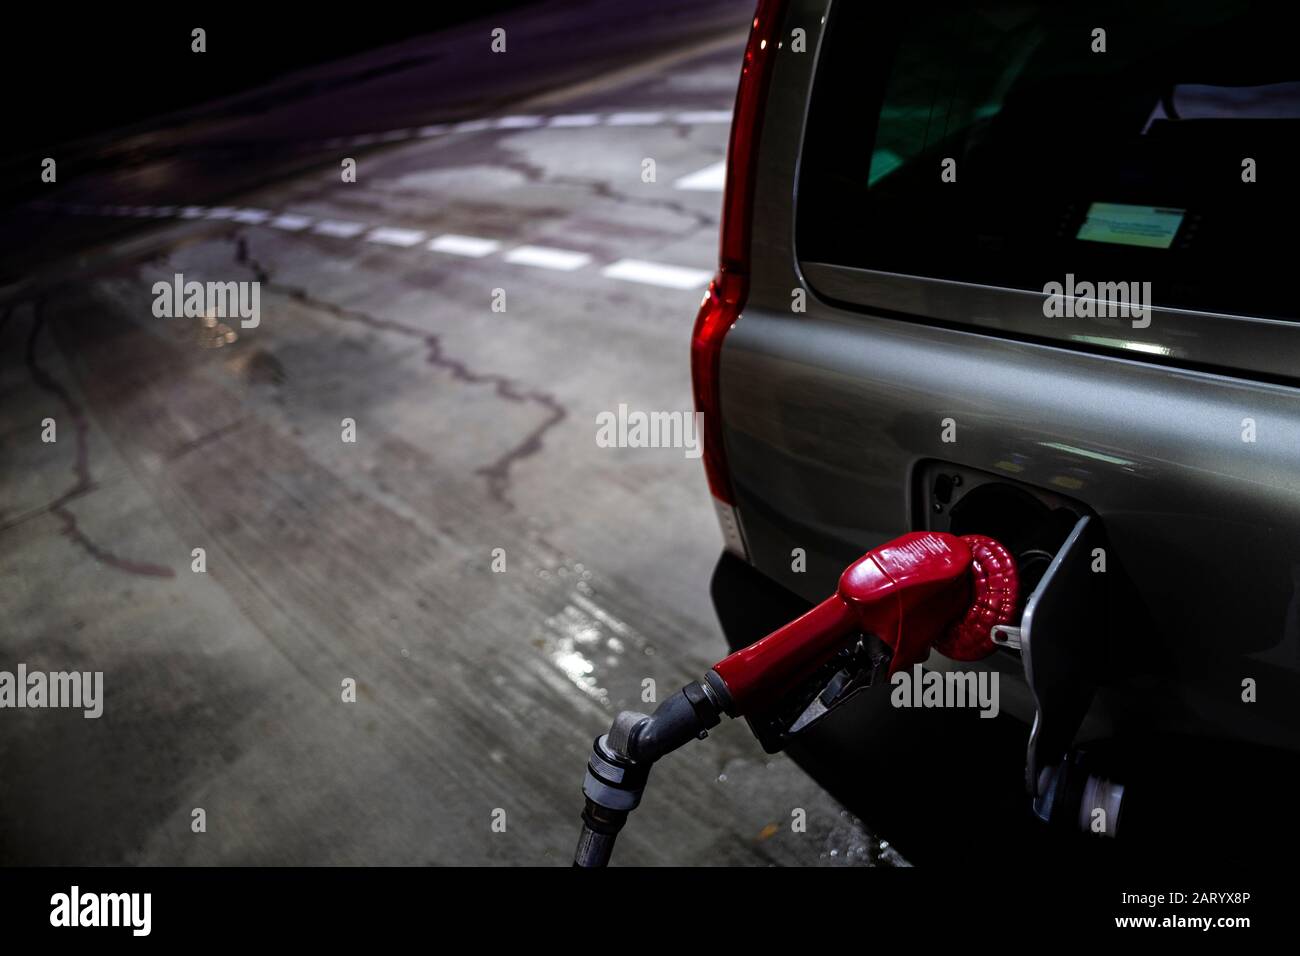 Fuel nozzle in car Stock Photo